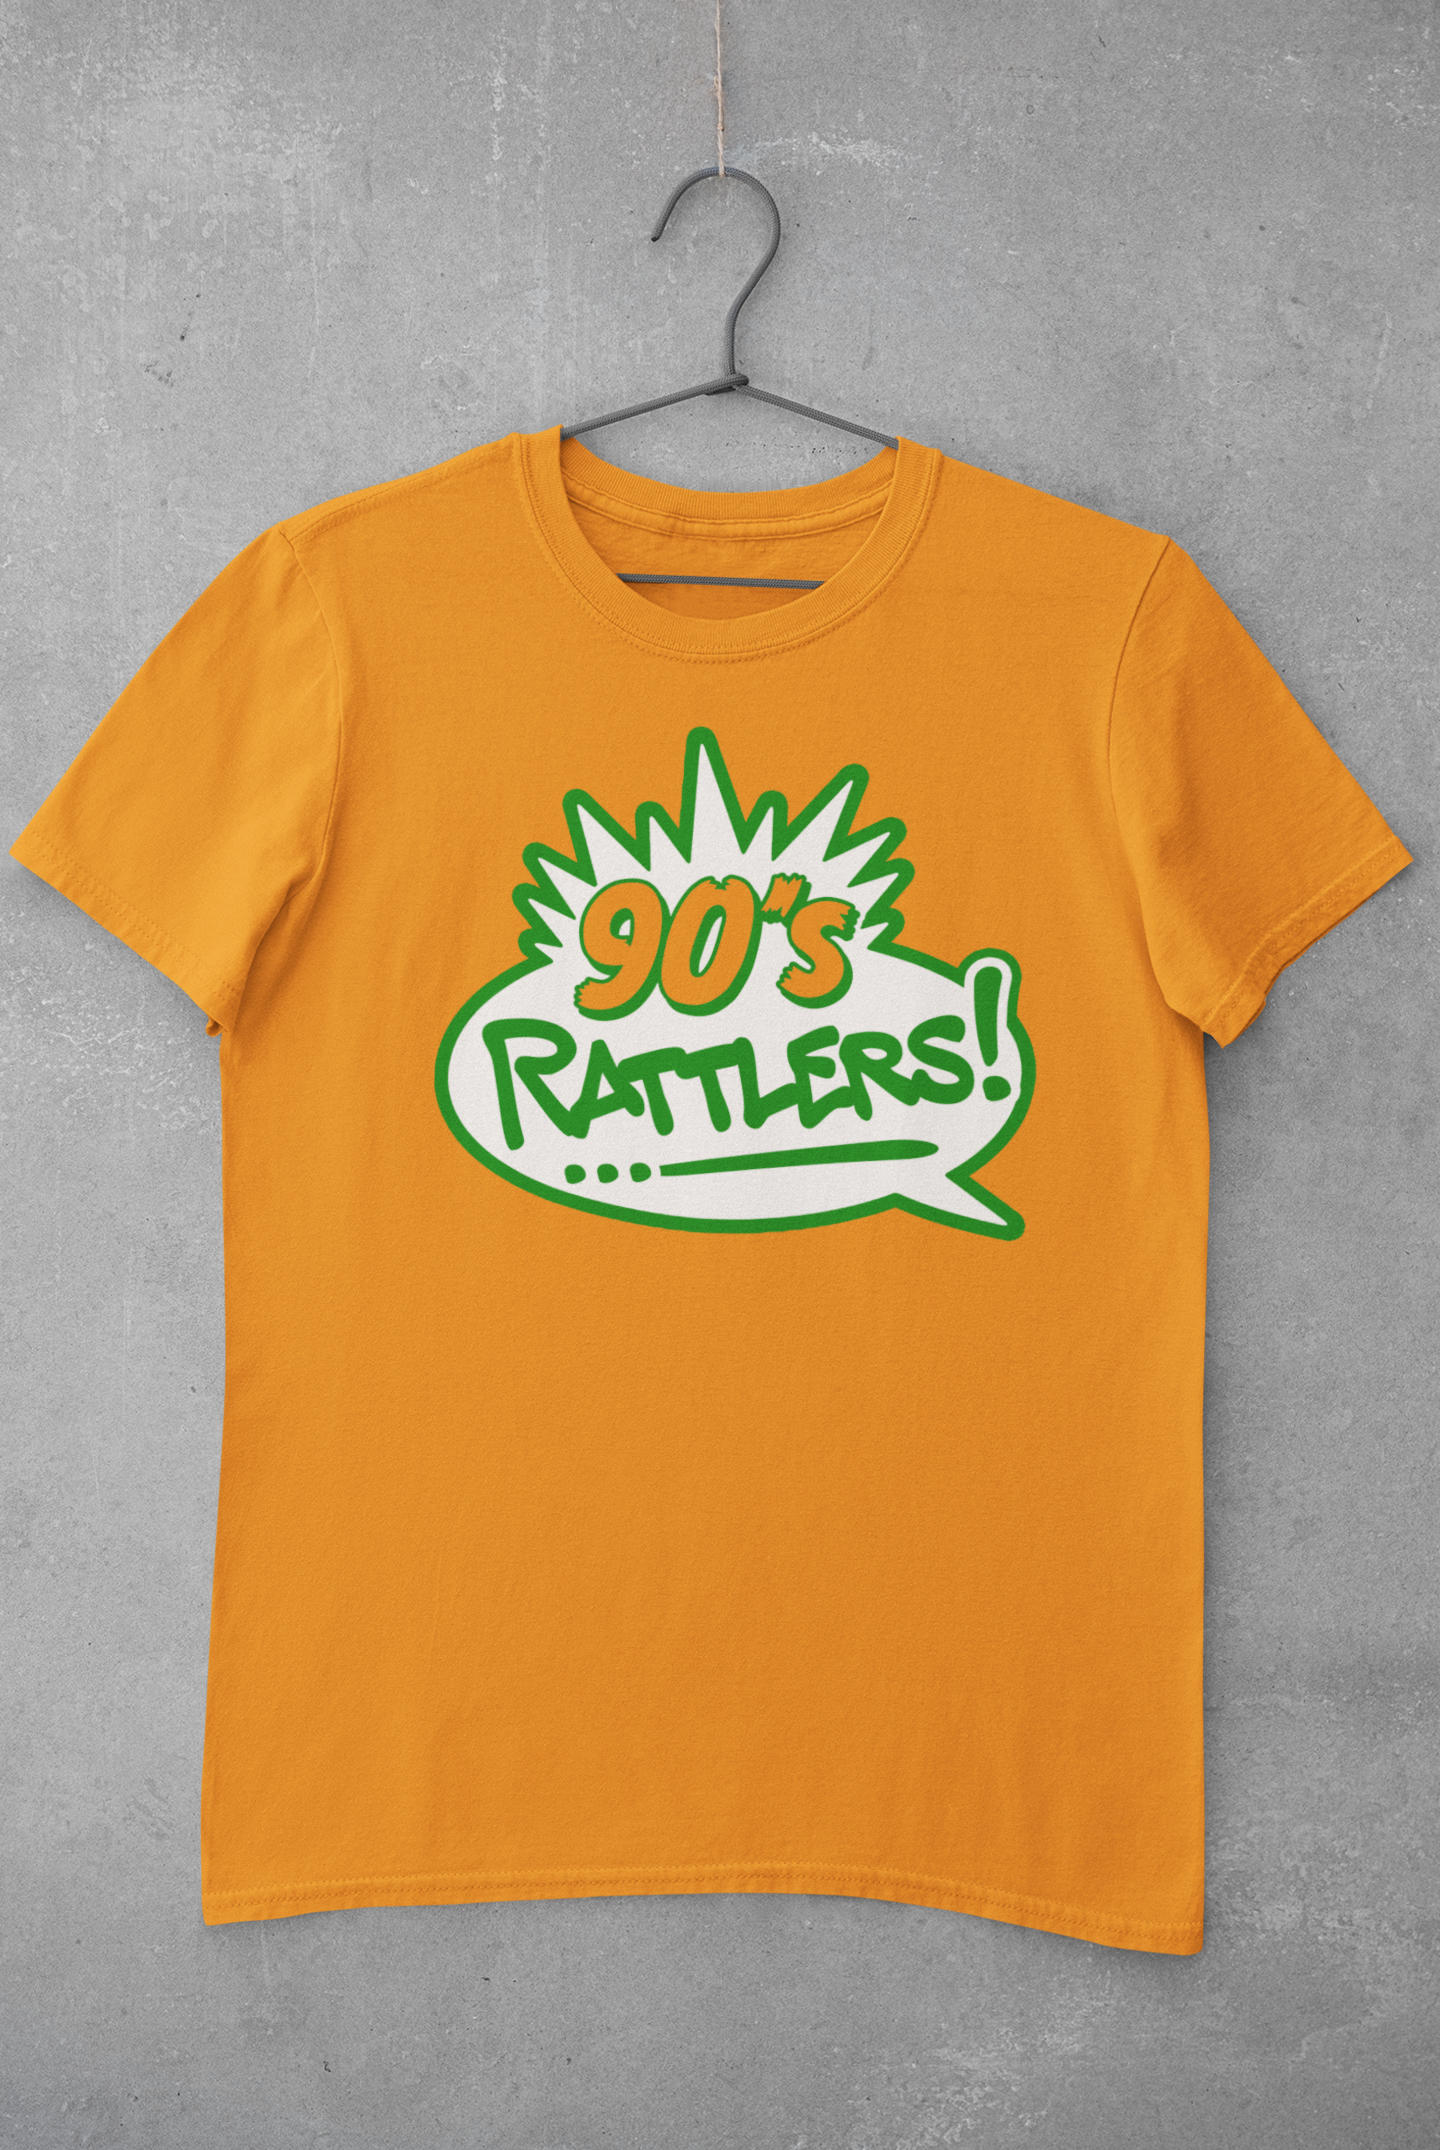 90's Rattlers (Yo! MTV Raps Style) T-shirt